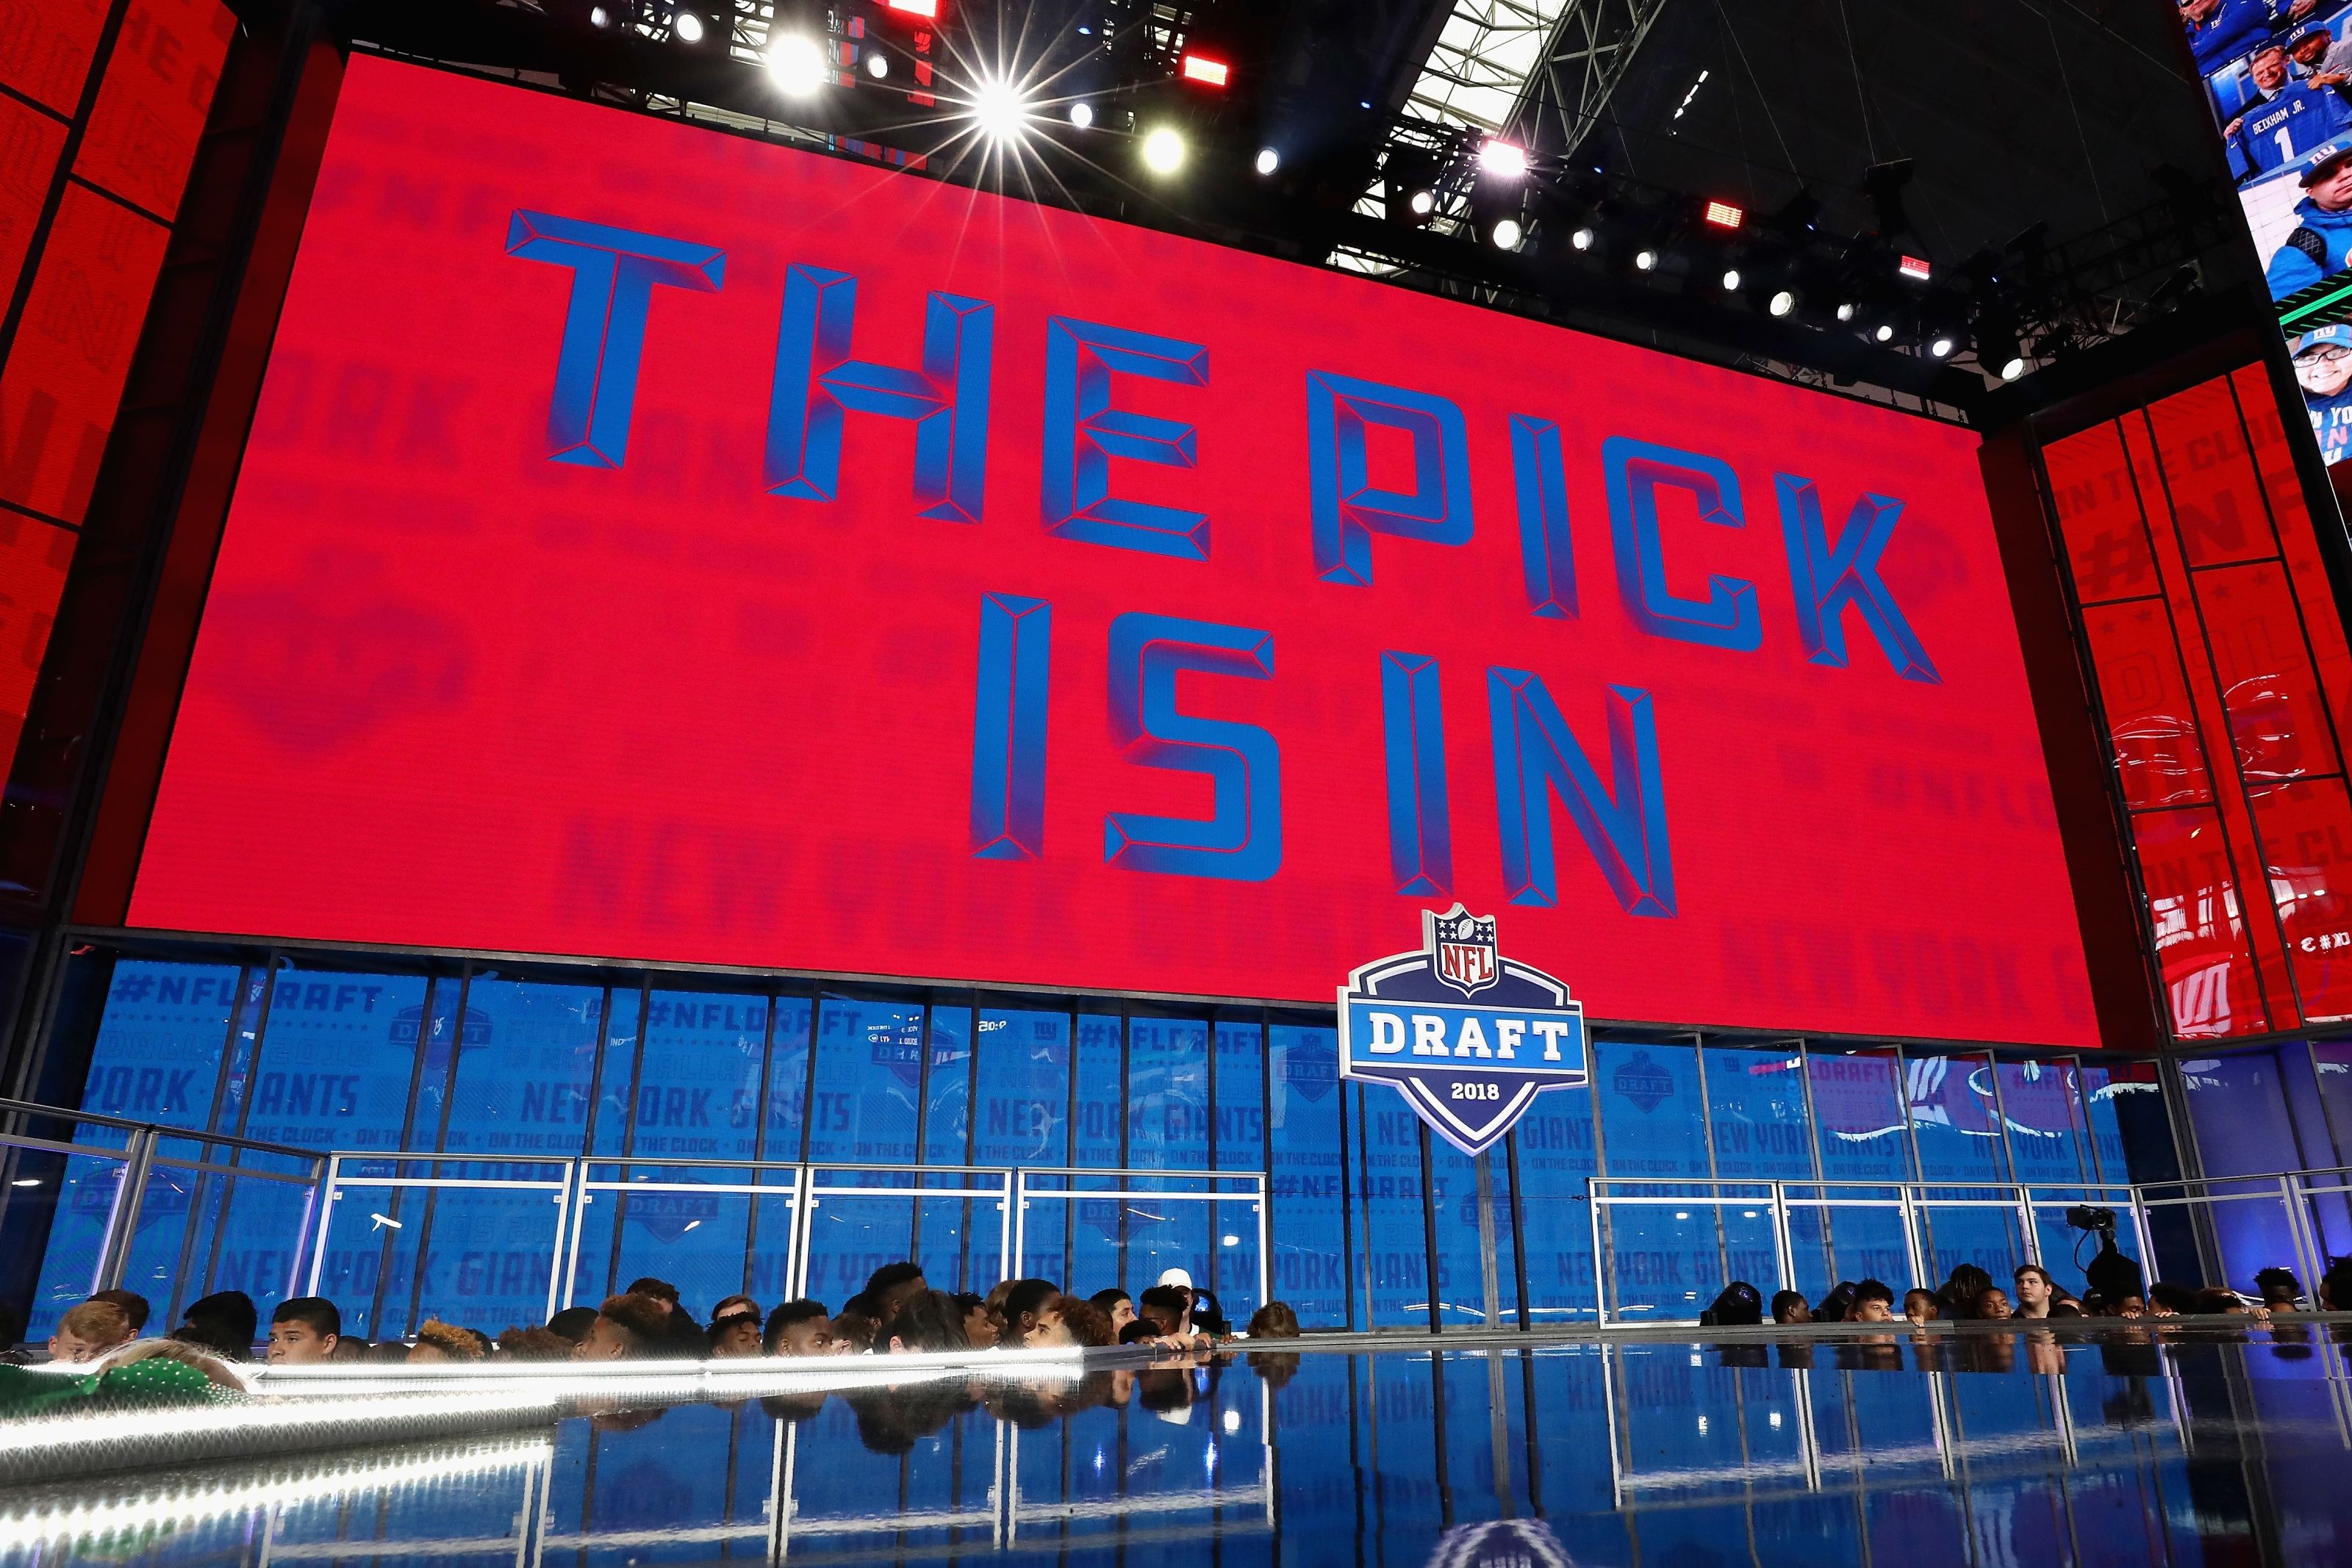 New York Giants Football 2020 7 round mock draft version 1.0